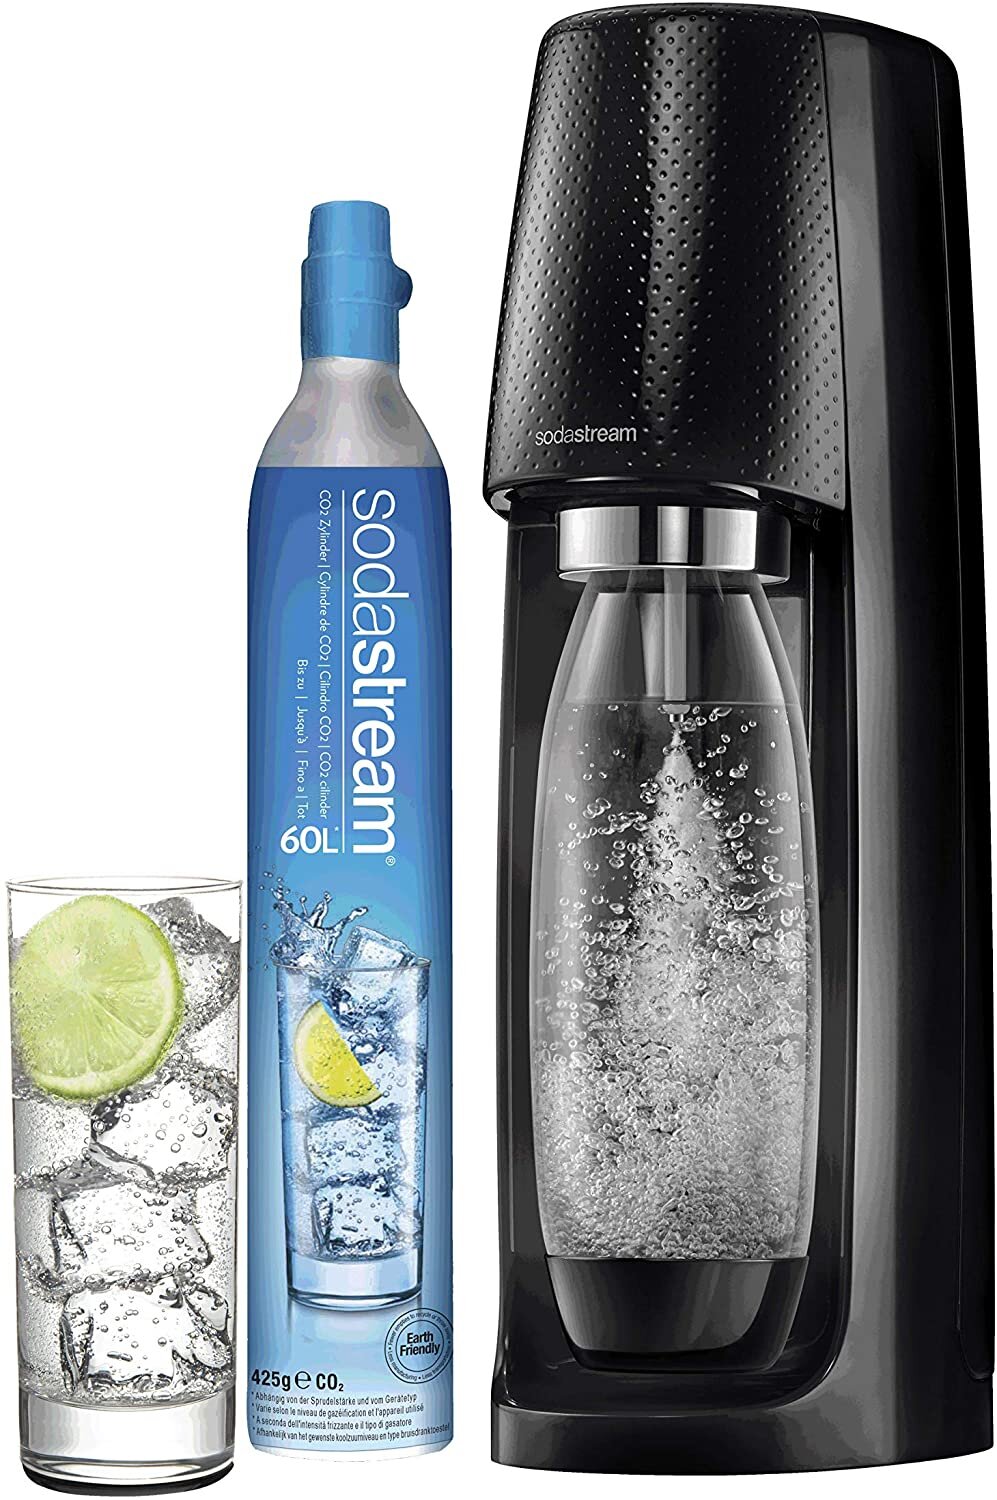 SodaStream's New Machine Takes Glass Bottles